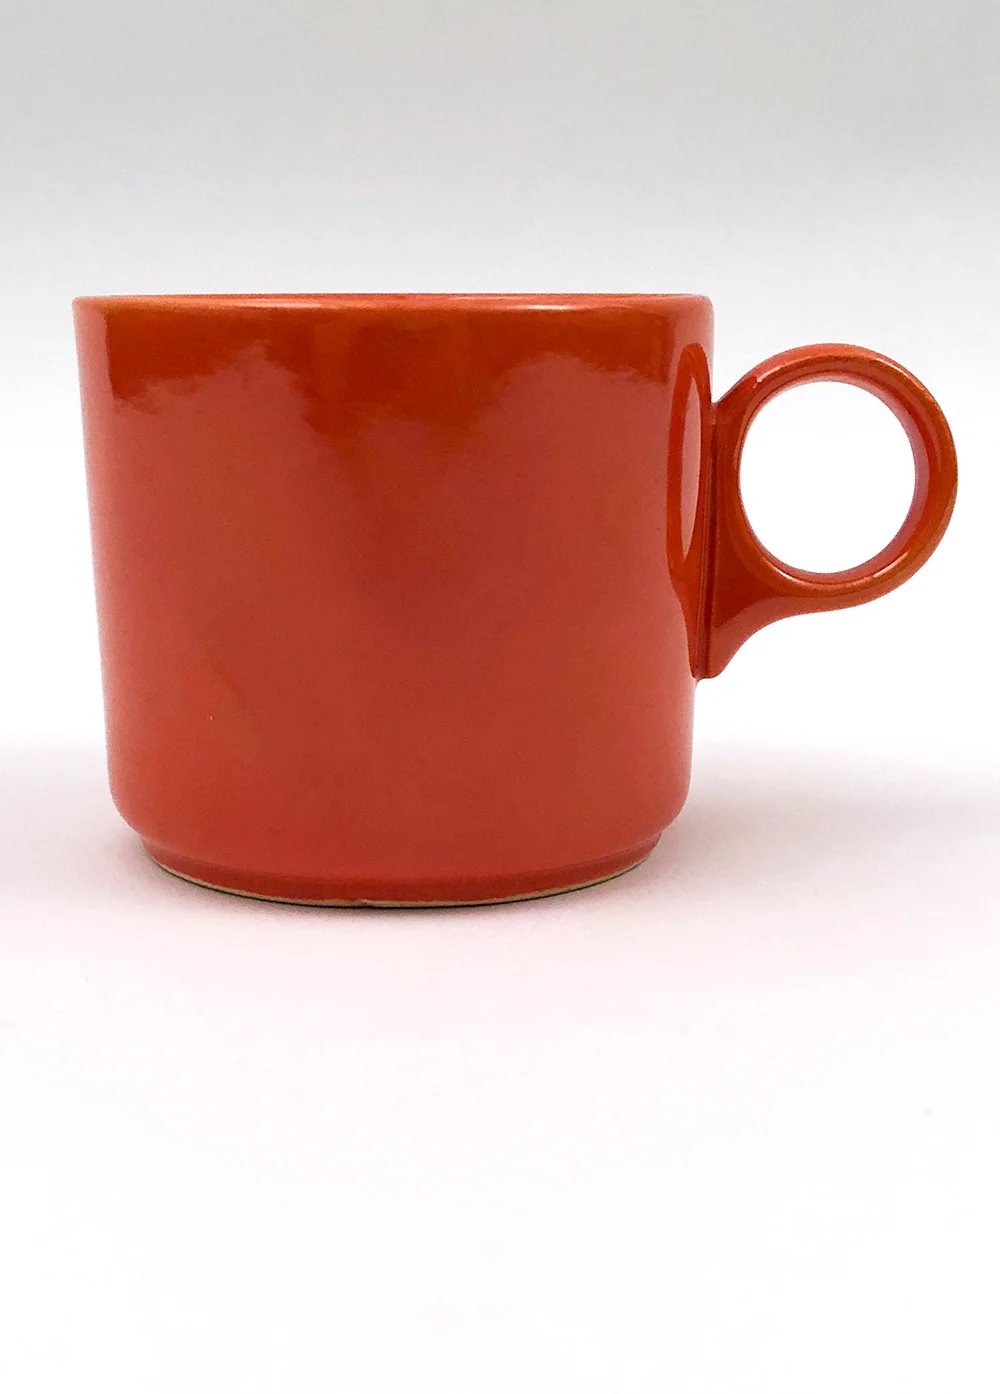 red vintage fiesta ironstone coffee mug in original mango colored glaze for sale